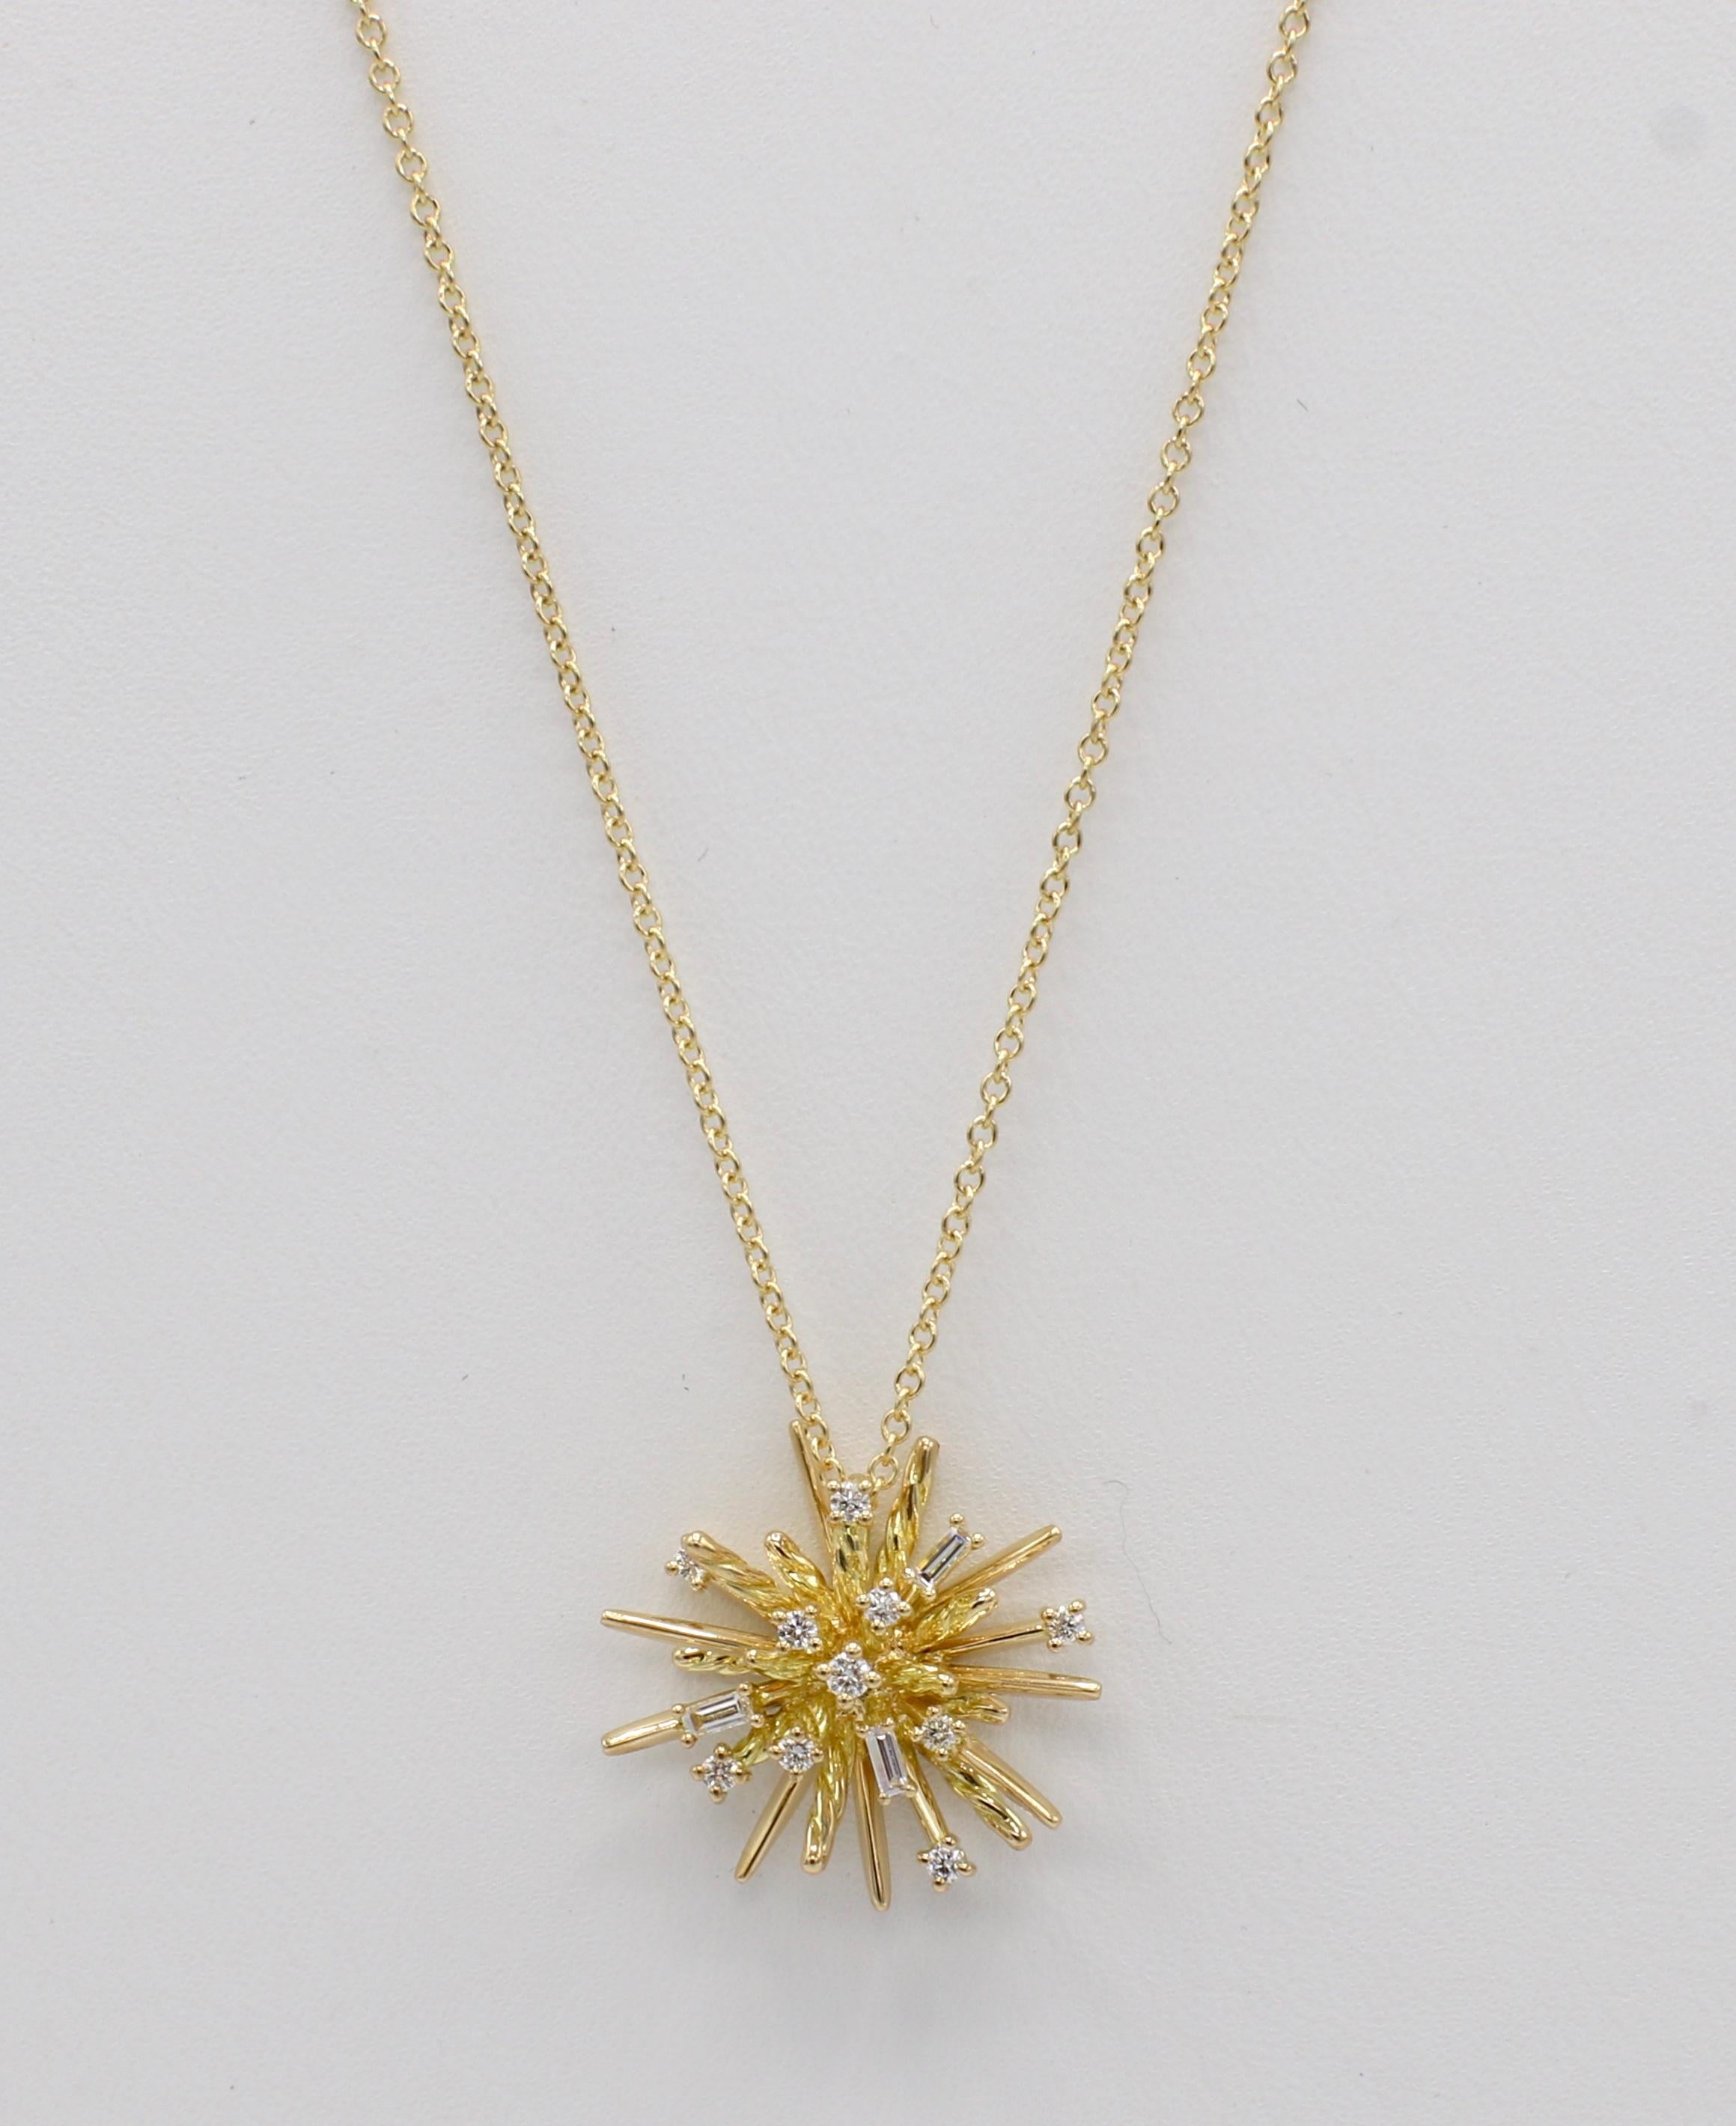 David Yurman 18K Yellow Gold Supernova Diamond Small Pendant Necklace 

Metal: 18k yellow gold
Weight: 4.41 grams
Diamonds: Approx. 0.17 CTW G VS 
Pendant measures 17 x 17.5mm 
Chain is 18